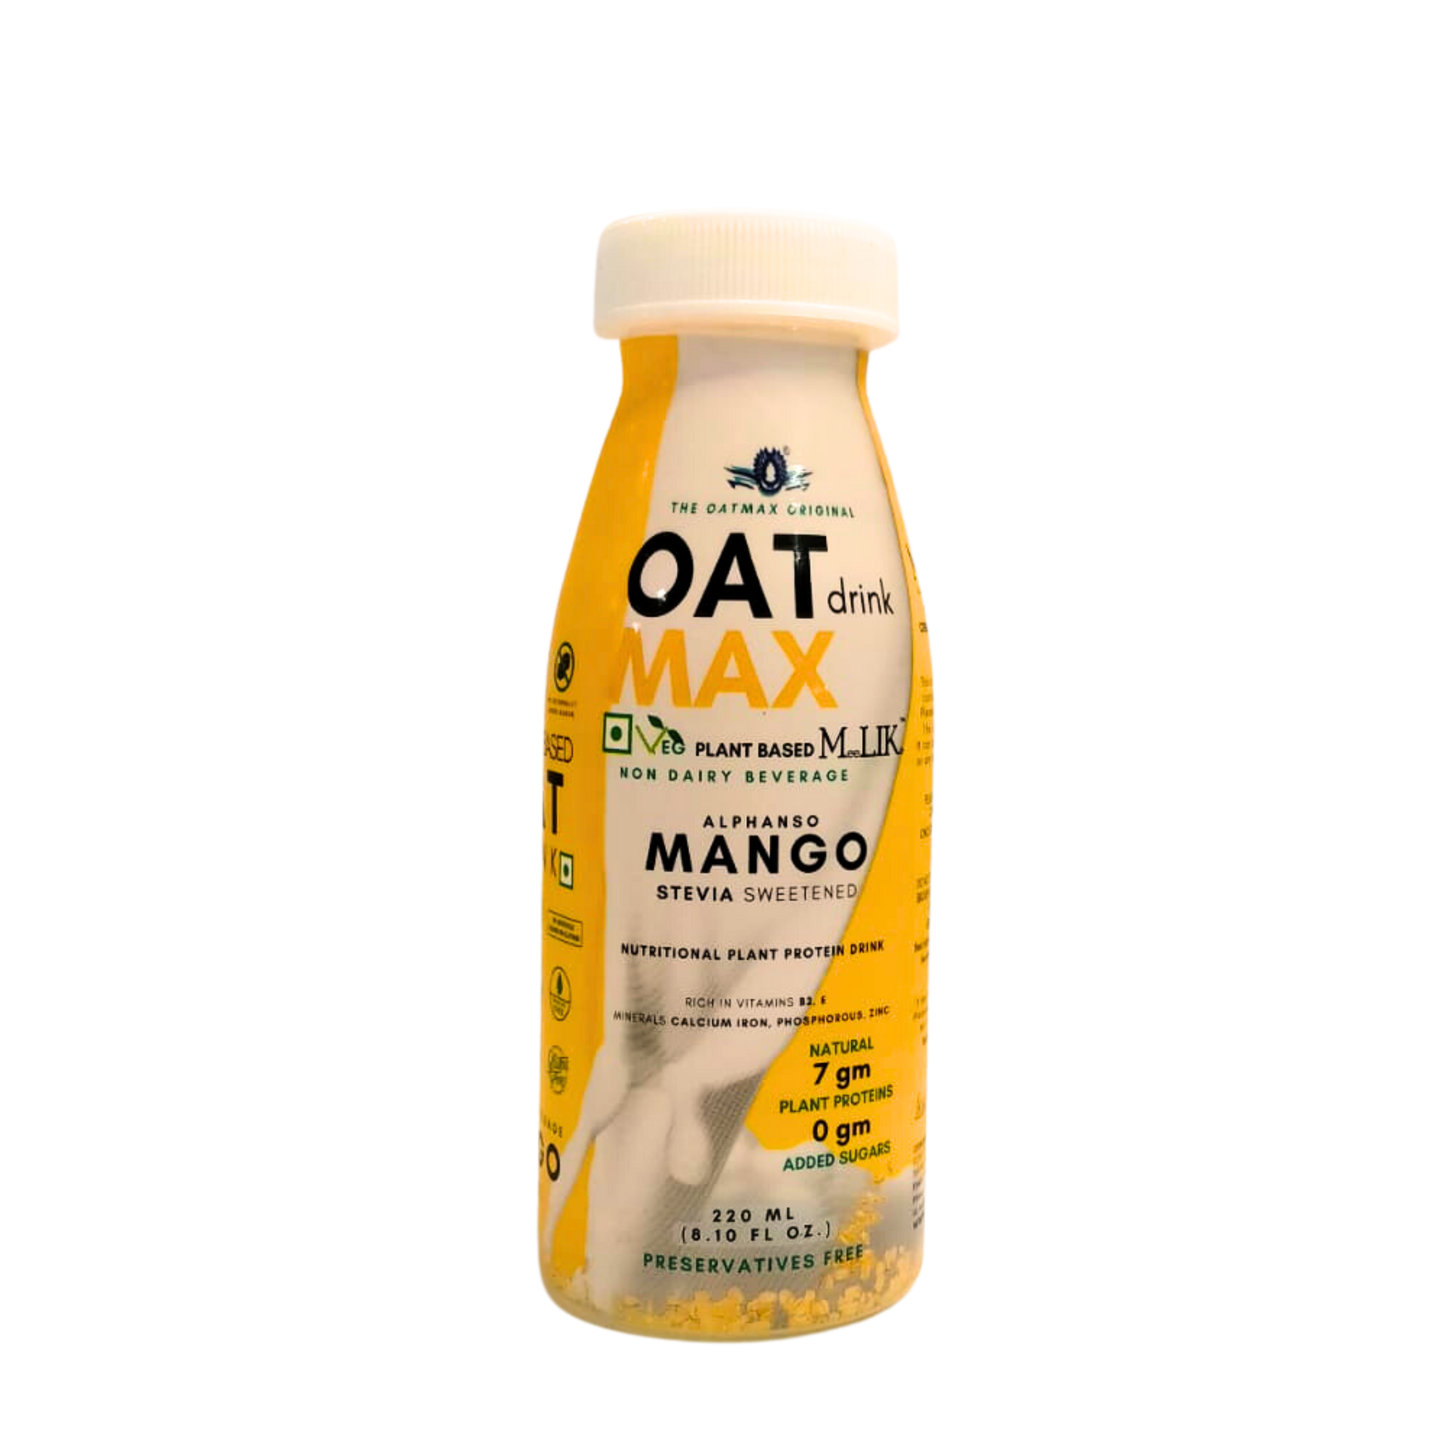 OATMAX Oat Milk Mango - Pack of 6 (220 ml each) - Lactose-free, Stevia Sweetened, Preservatives-free, Plant based Vegan Milk Alternative